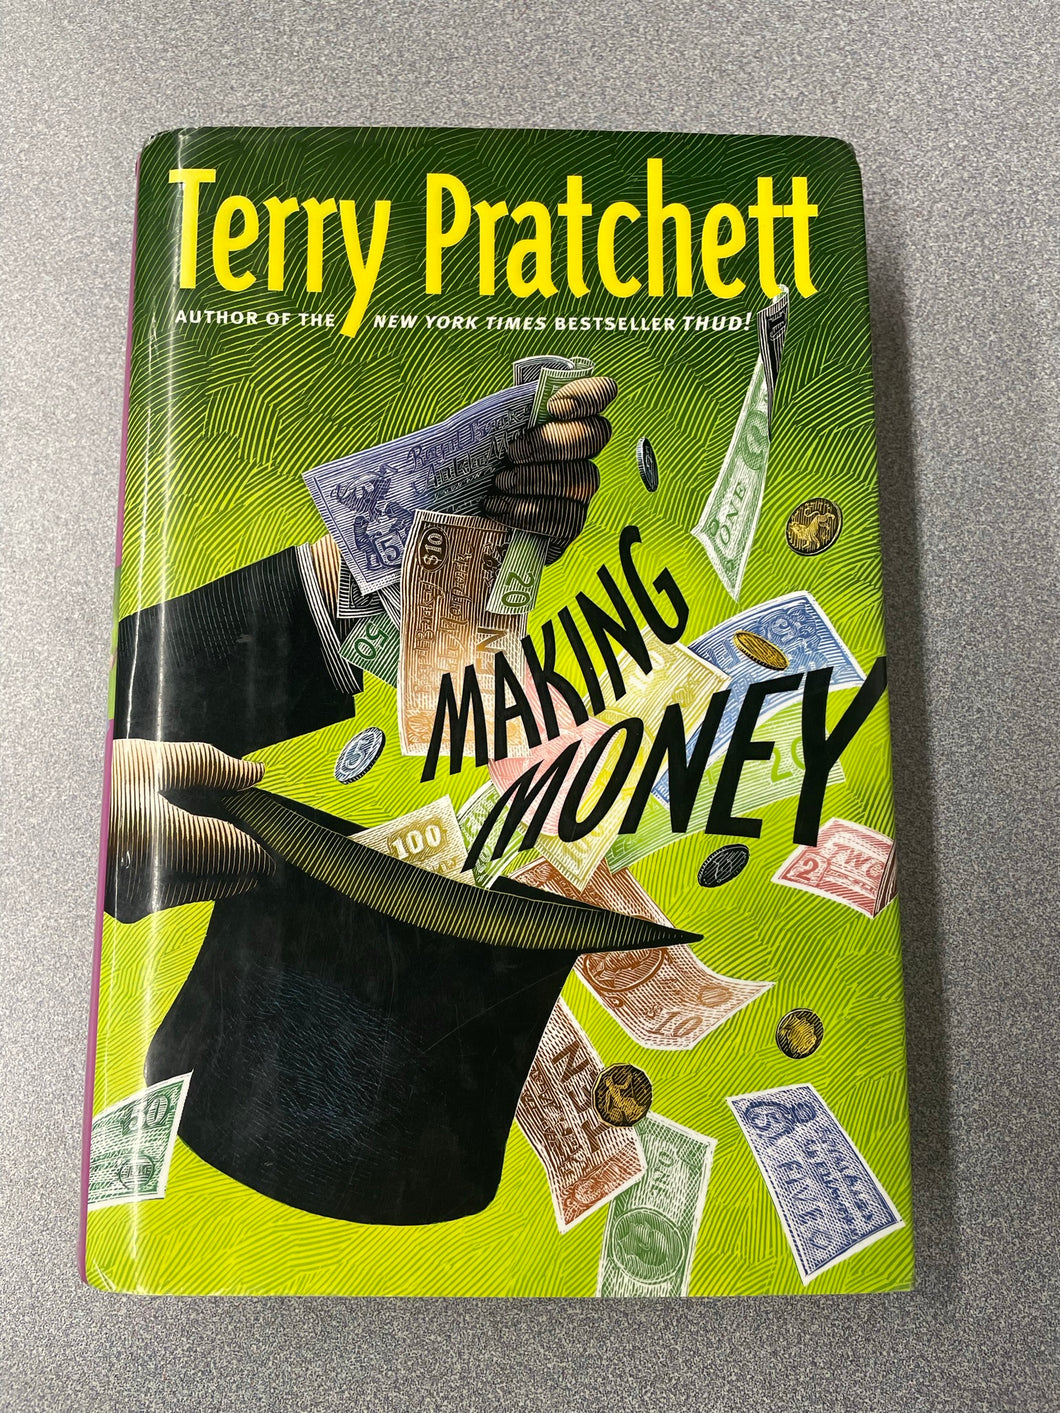 Pratchett, Terry, Making Money [2007] SF 9/23